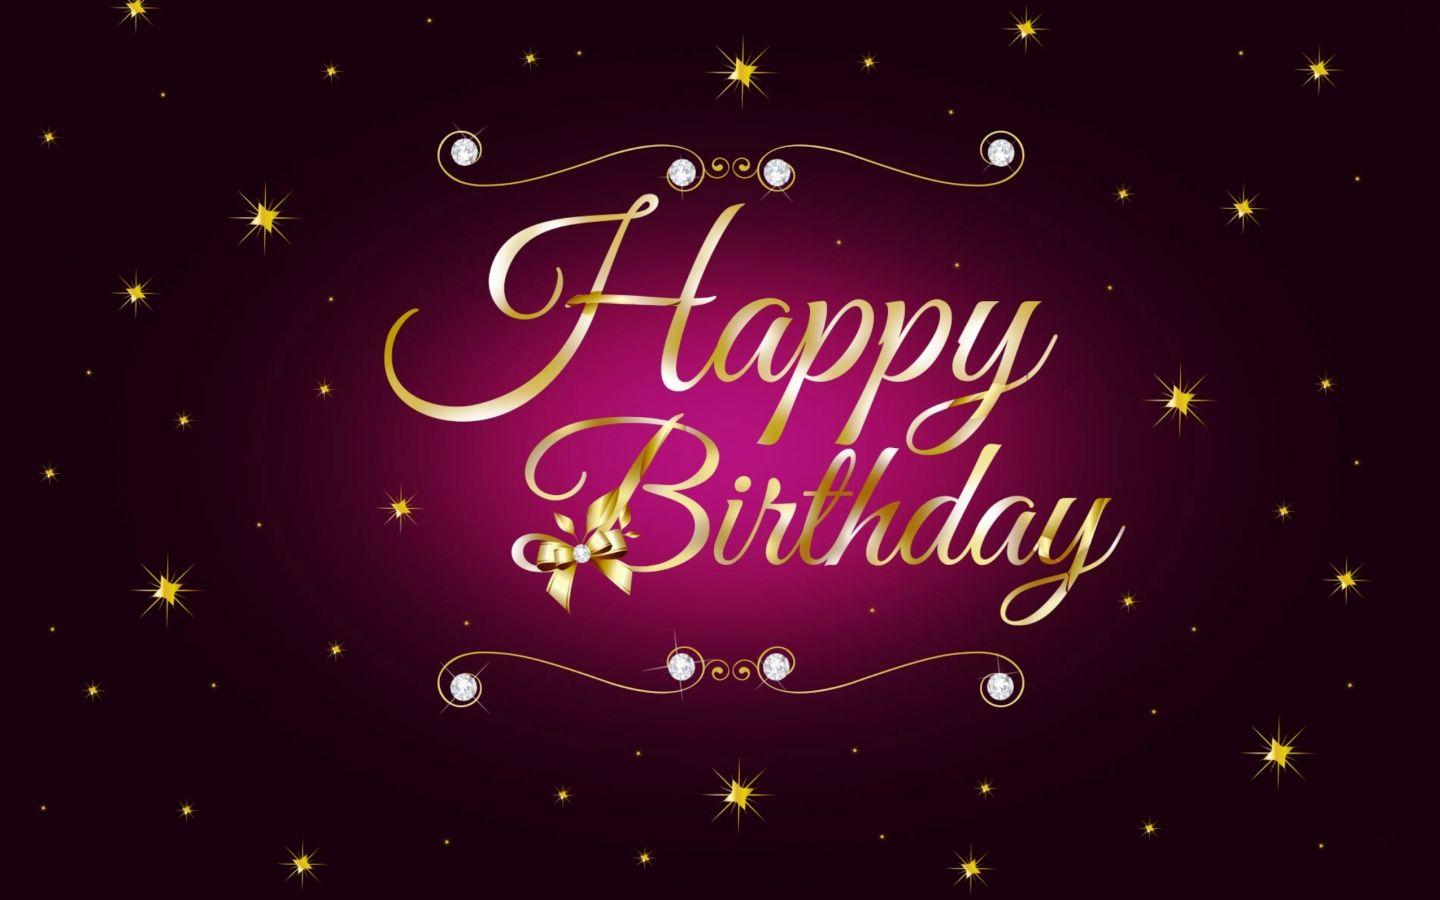 Happy Birthday Cake Whatsapp dp Image Photo Picture Pics Wallpaper